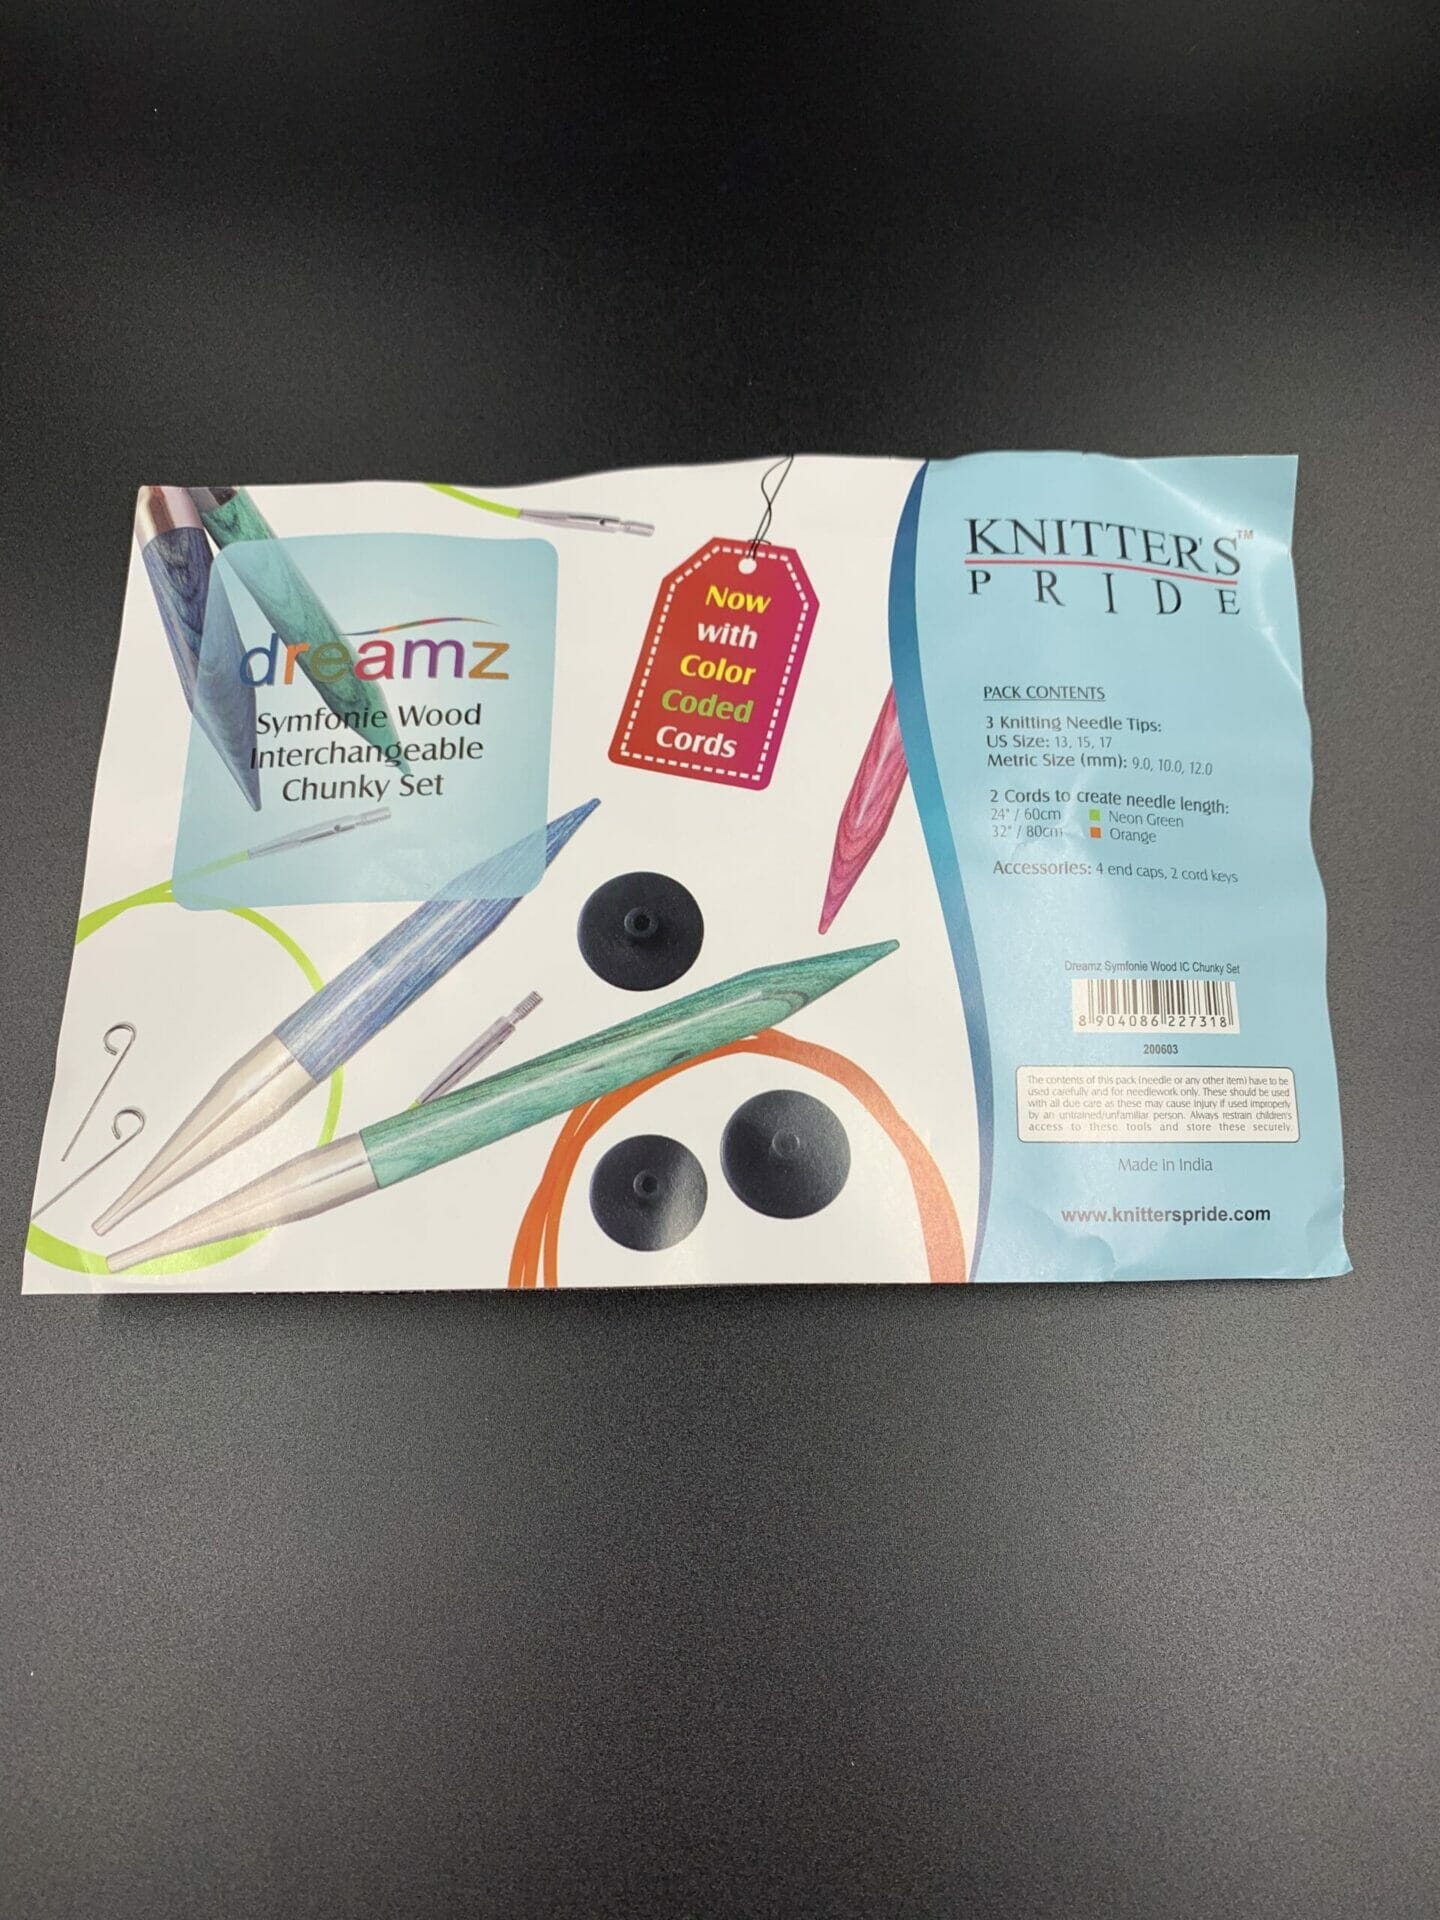 Knitter's Pride Knitting Needles Dreamz Chunky Needle Set